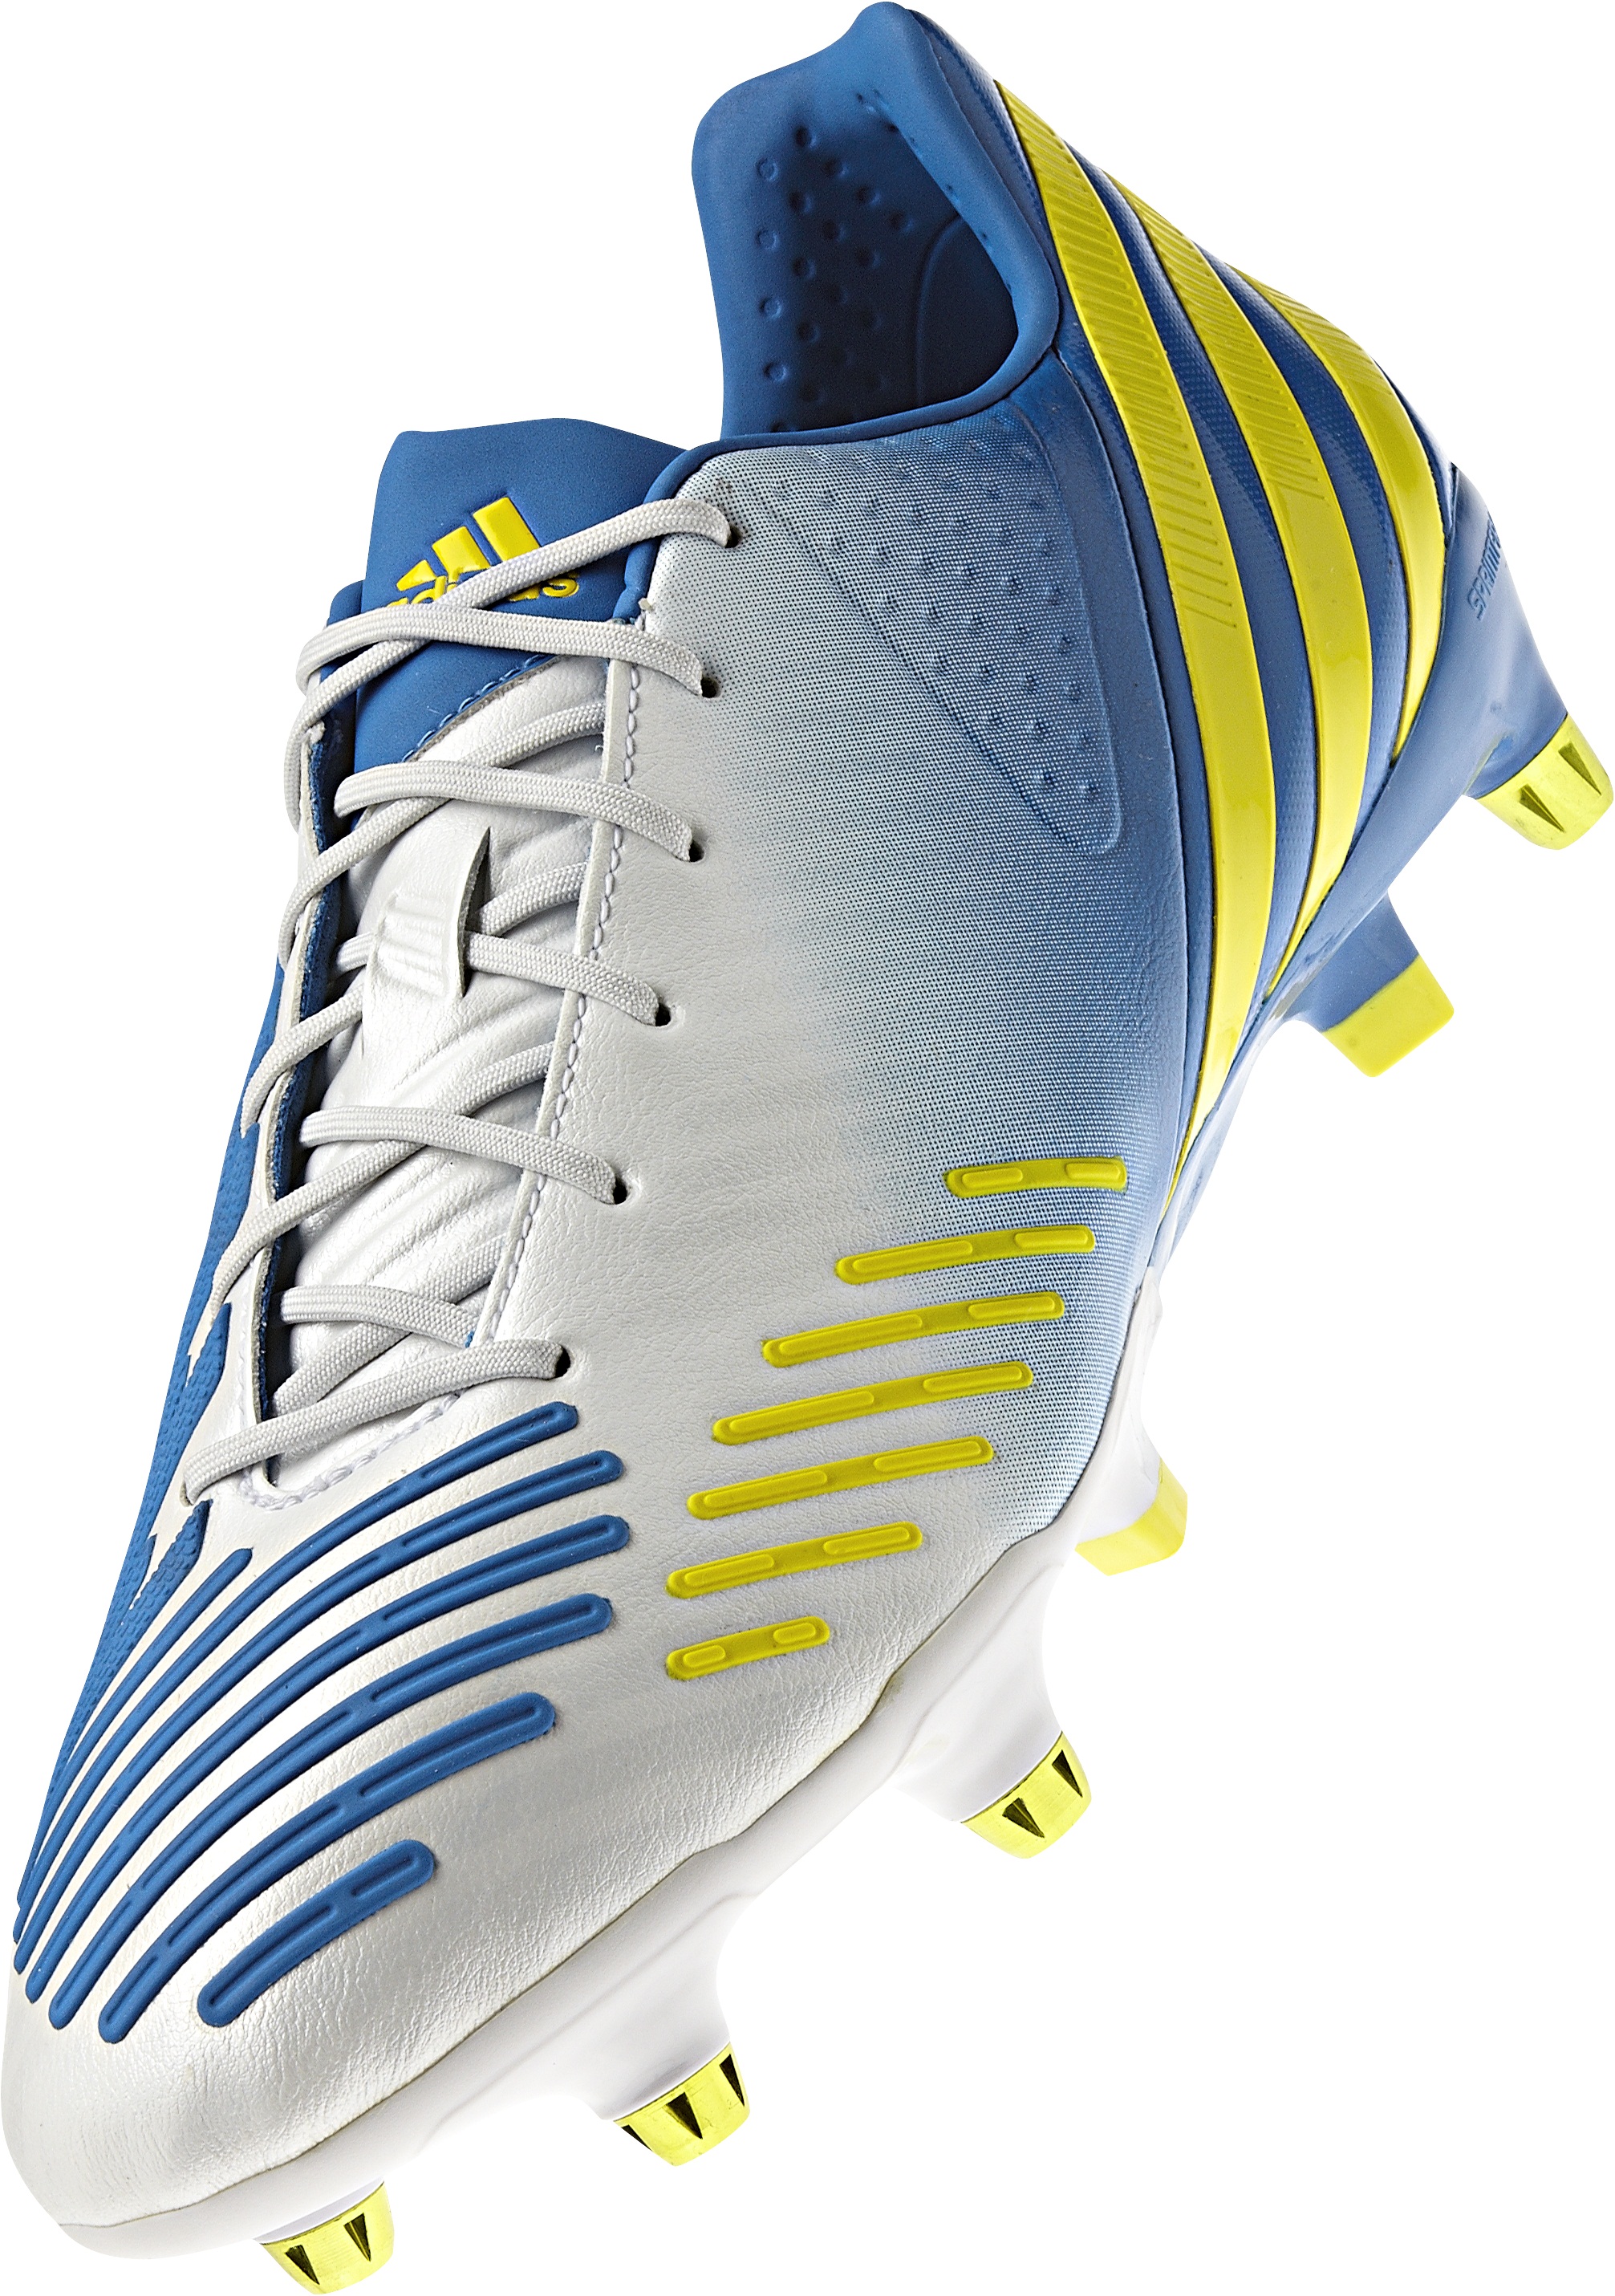 adidas predator lz white blue yellow